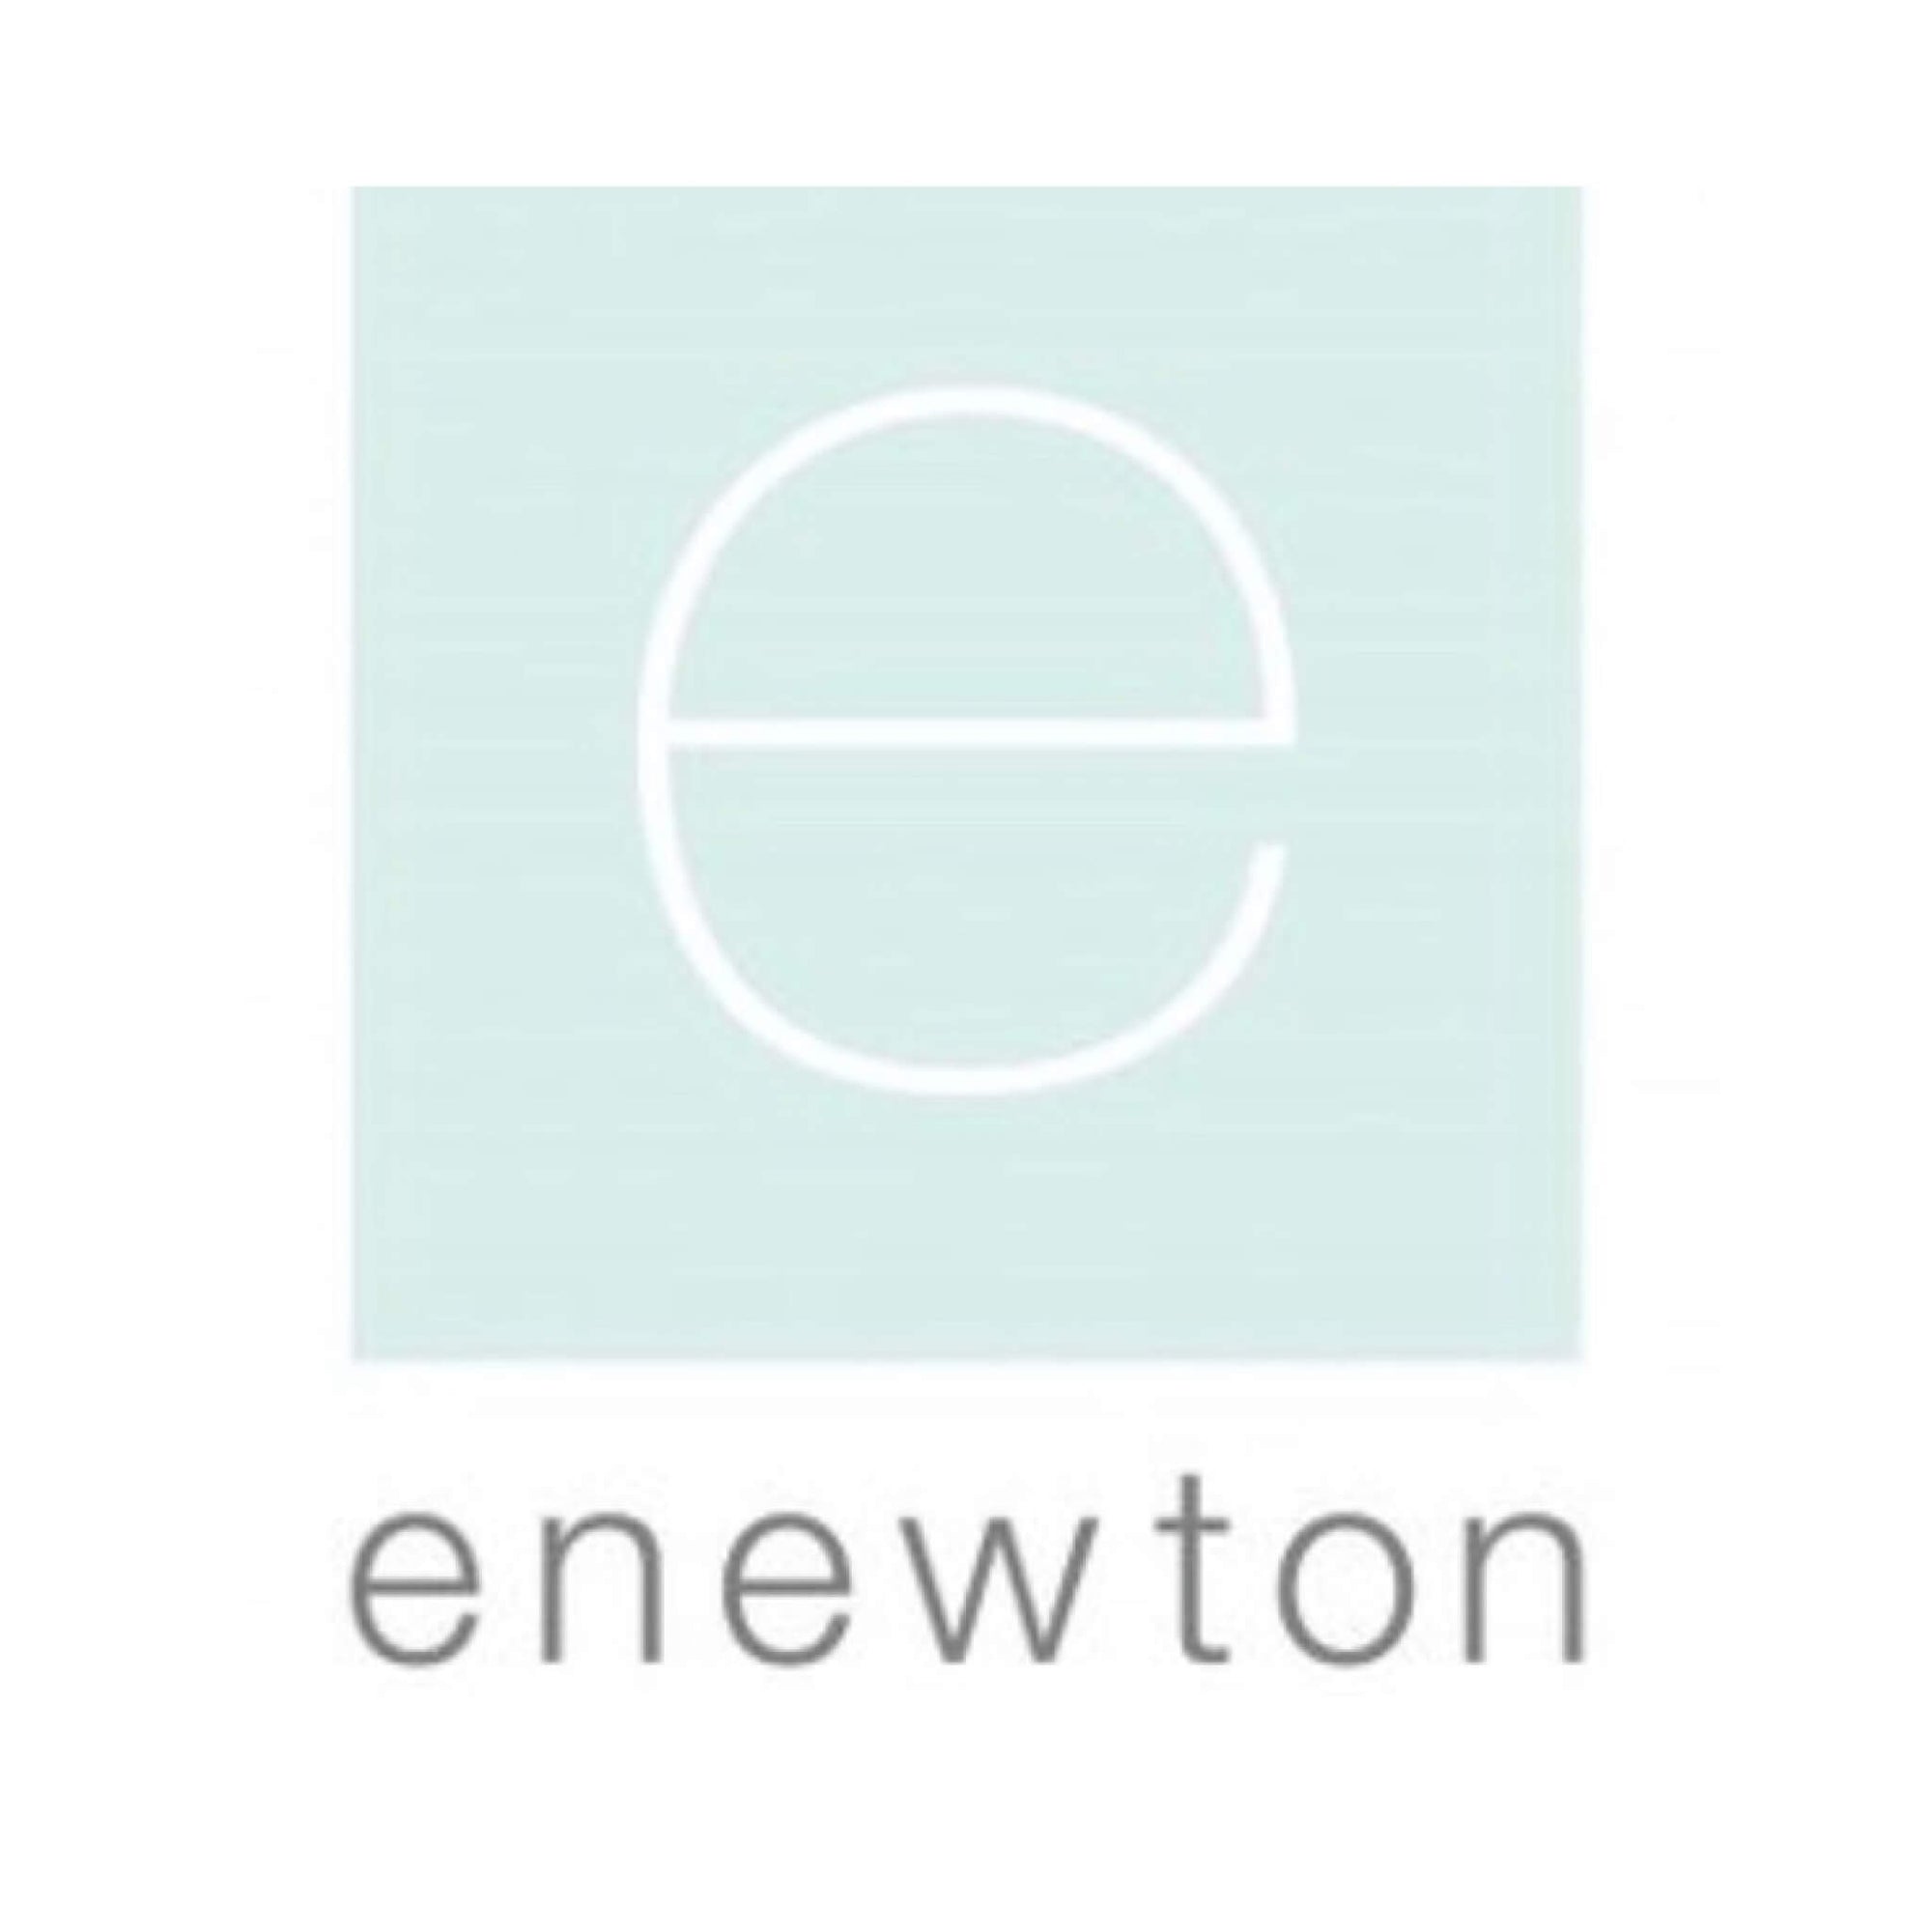 Enewton | Molly's! A Chic and Unique Boutique